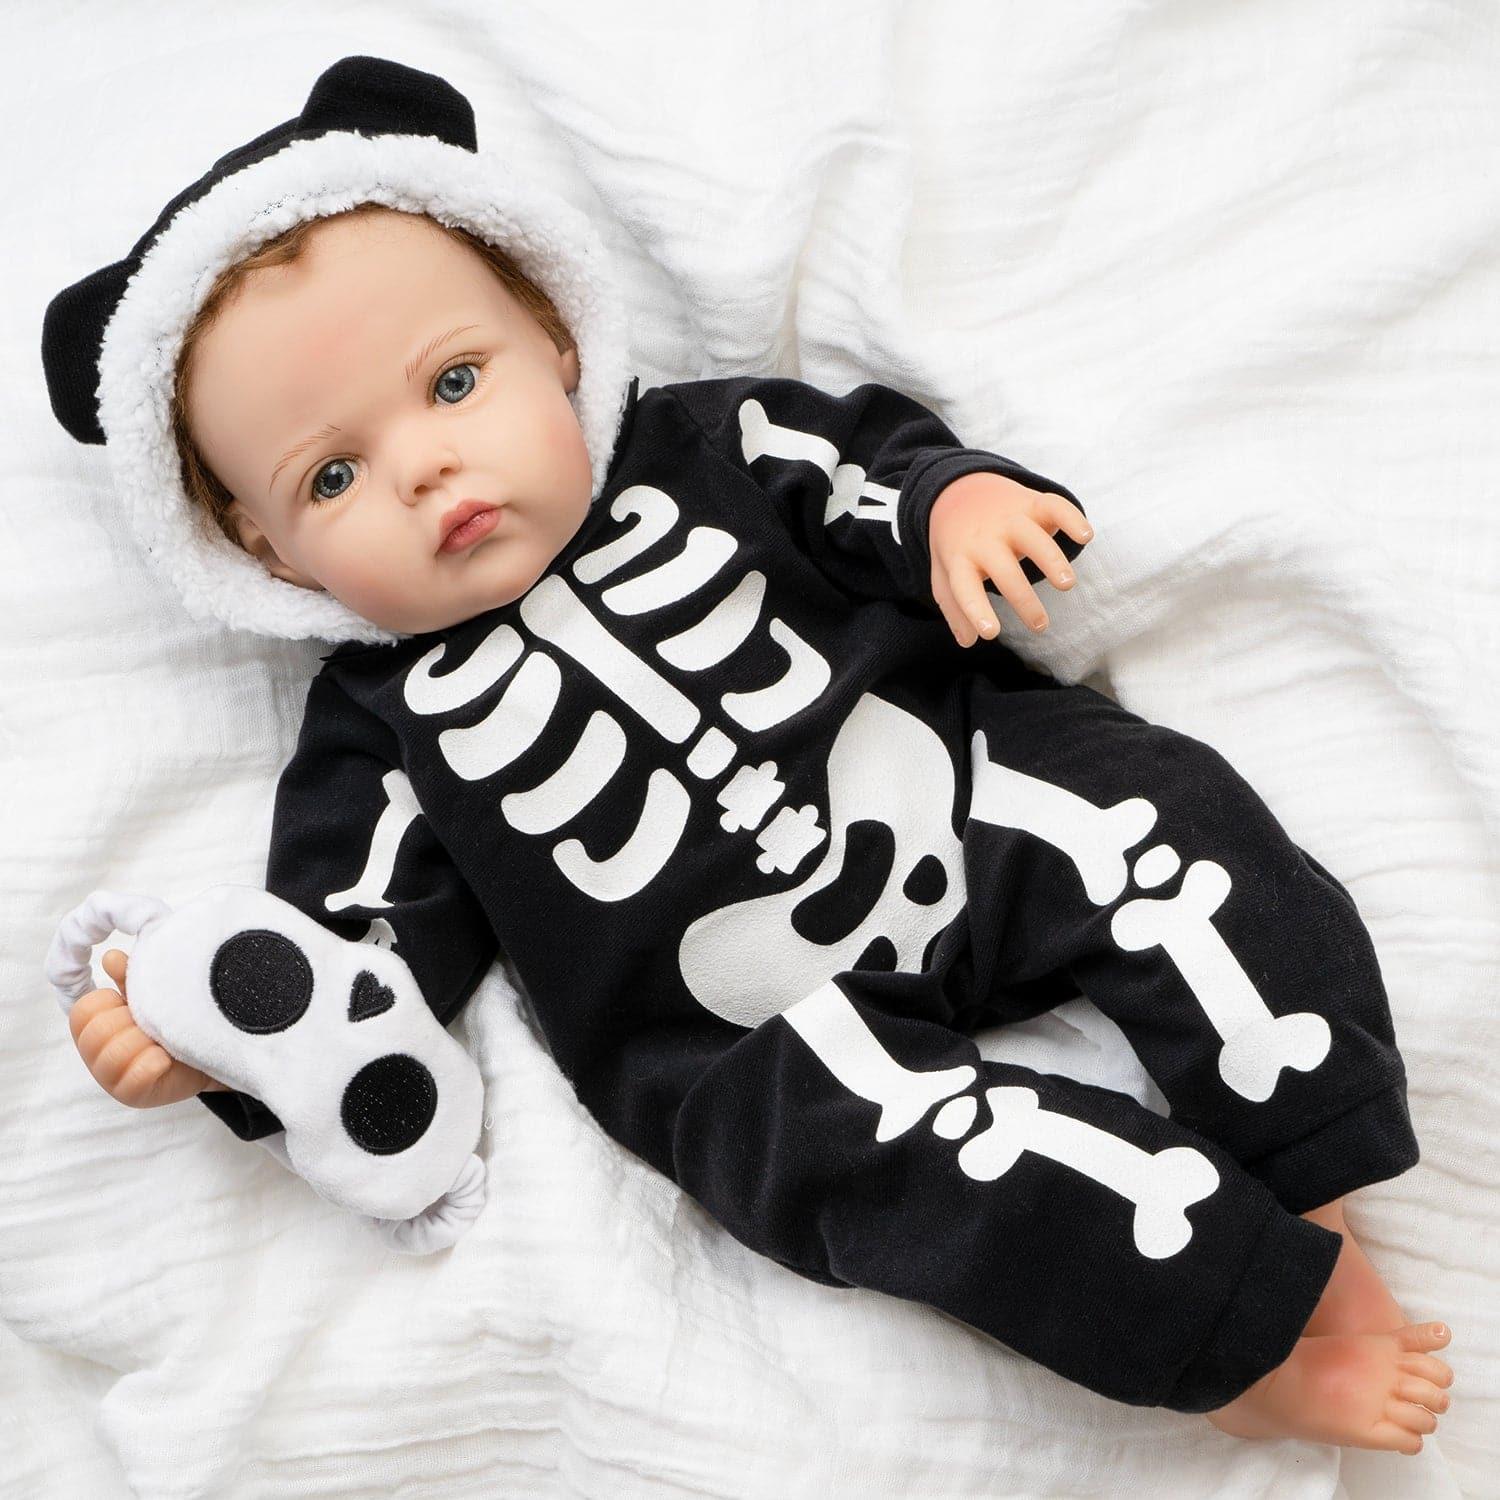 Paradise Galleries Halloween Reborn Toddler Baby Doll Peek-A-Boo